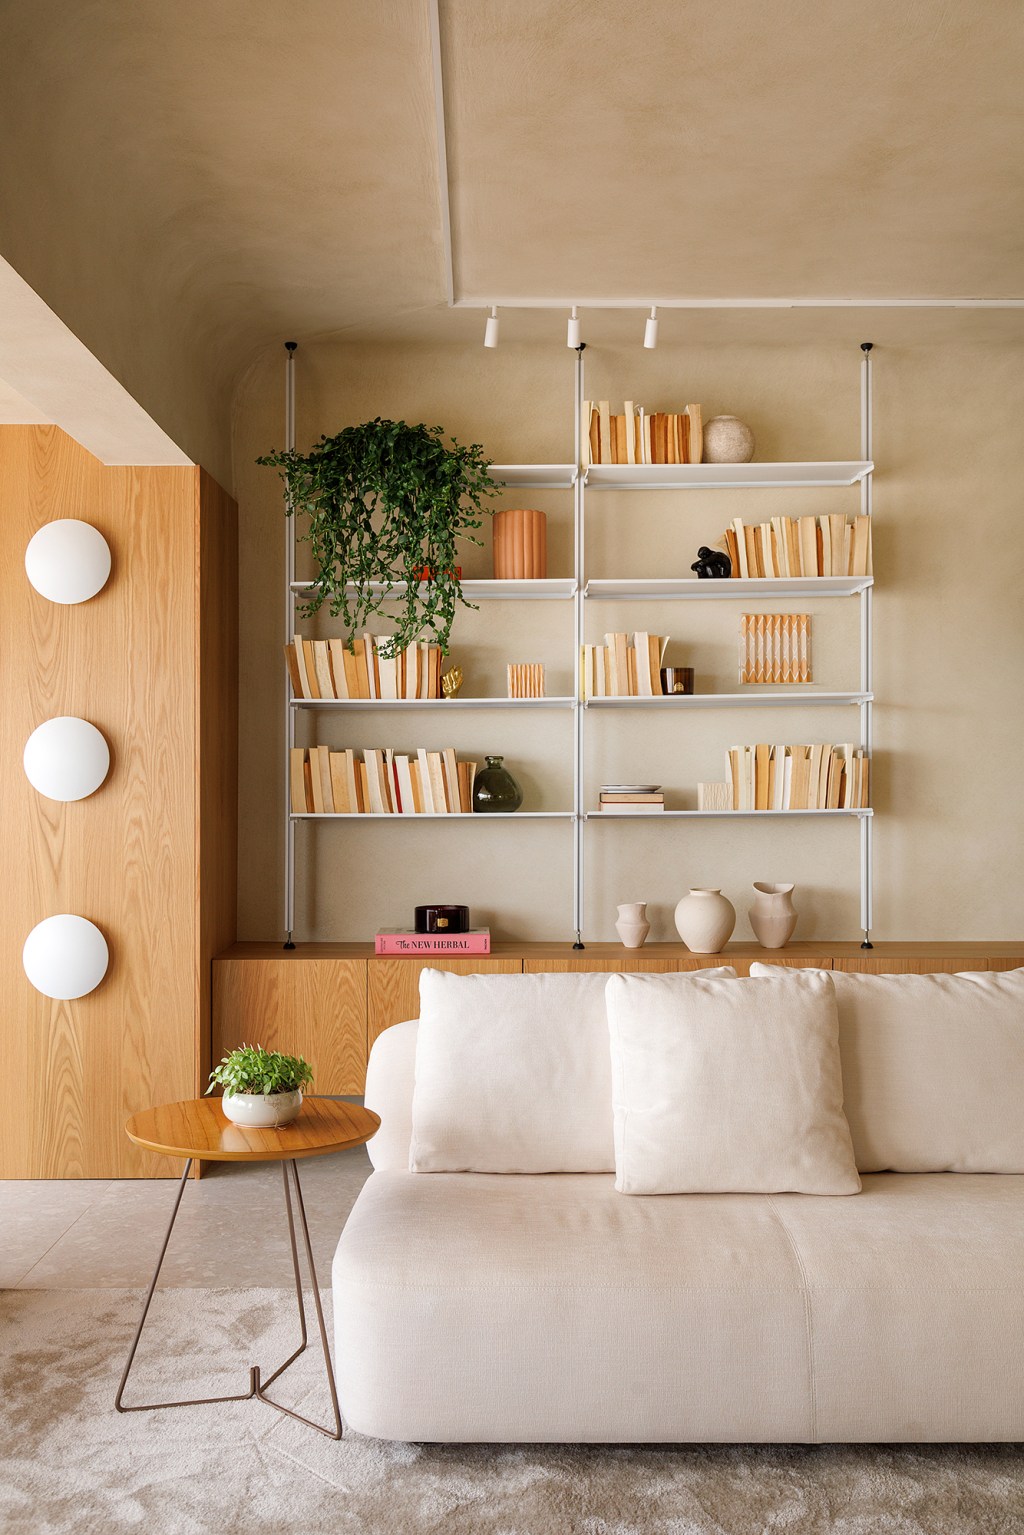 Apê 130 m2 ar mediterrâneo formas orgânicas Gustavo Marasca varanda sala estante tv sofa tapete cortina